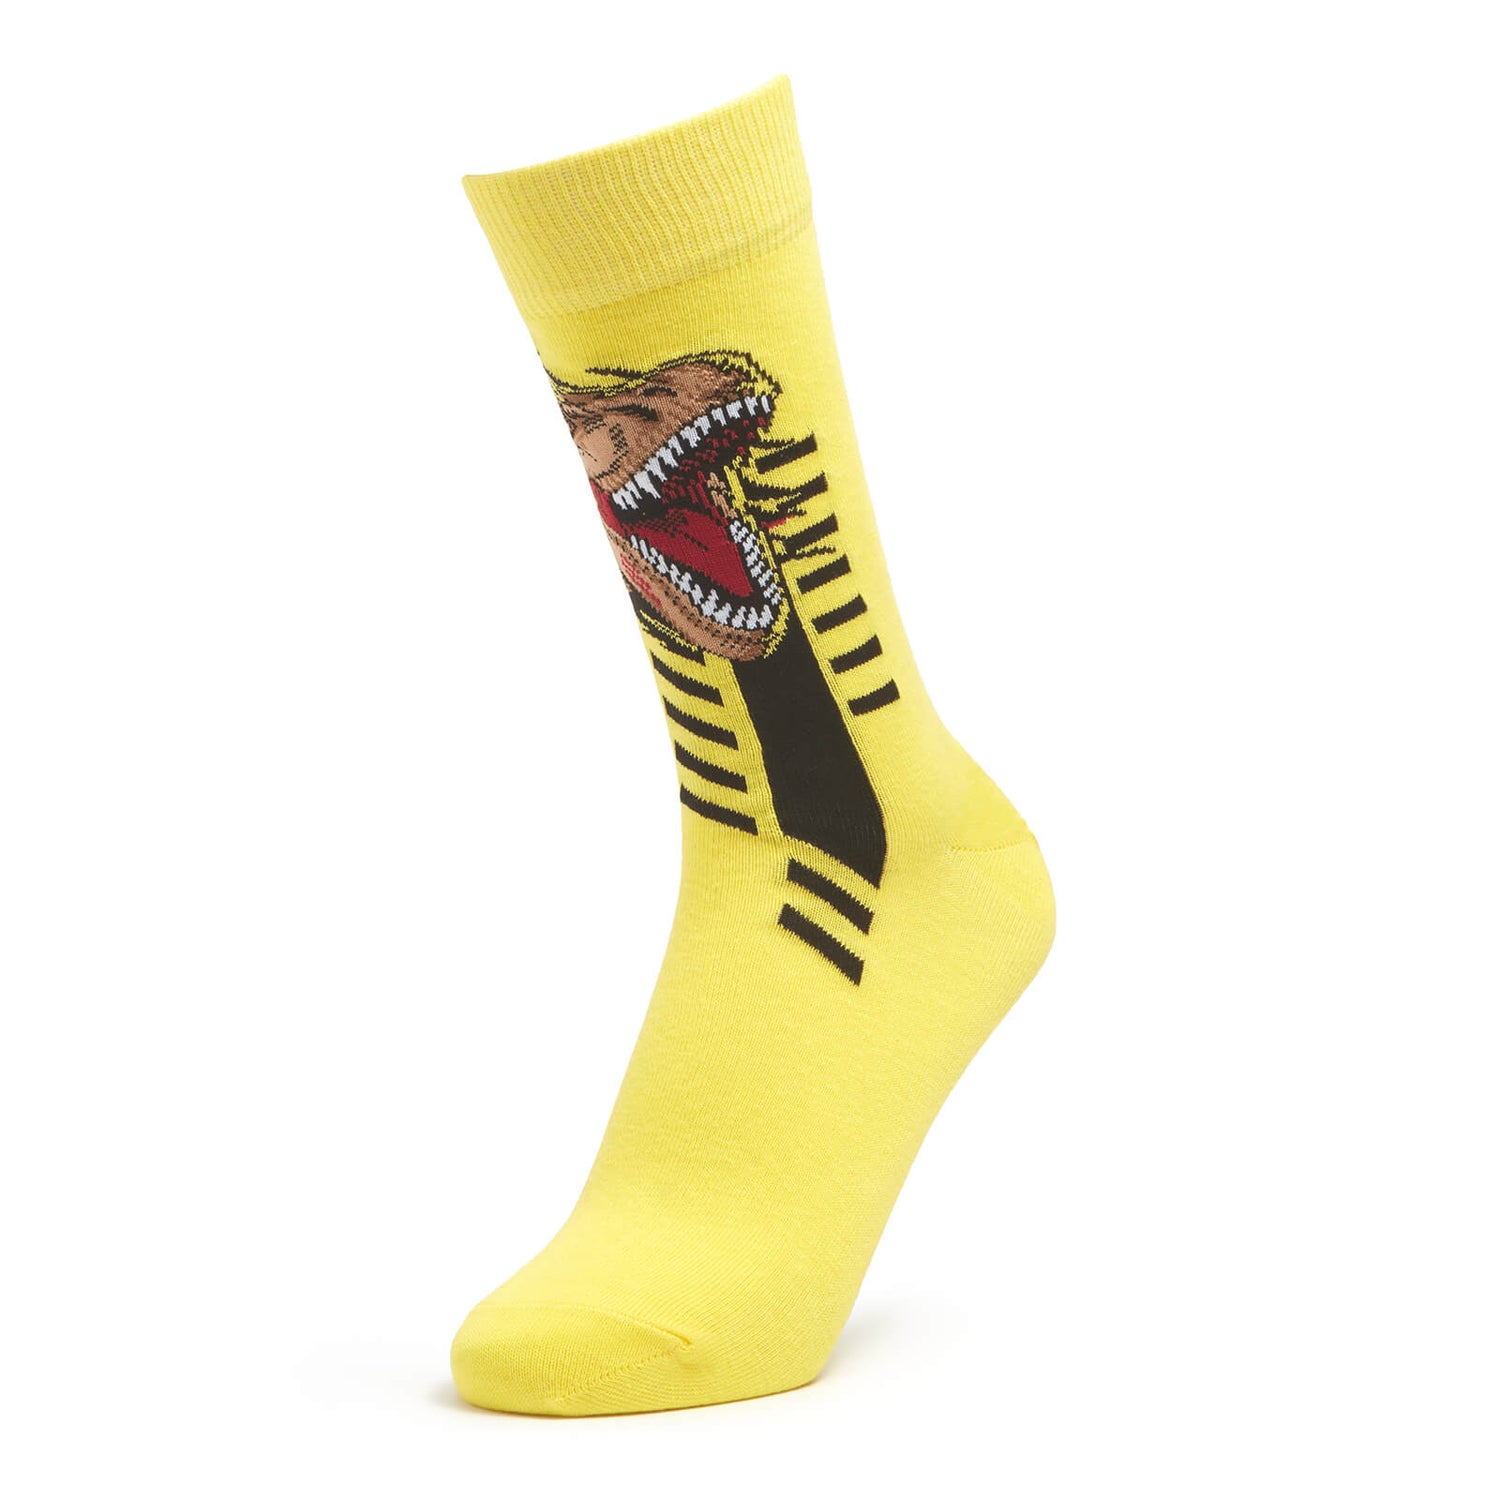 Men's Jurassic World Socks - Yellow - UK 4-7.5